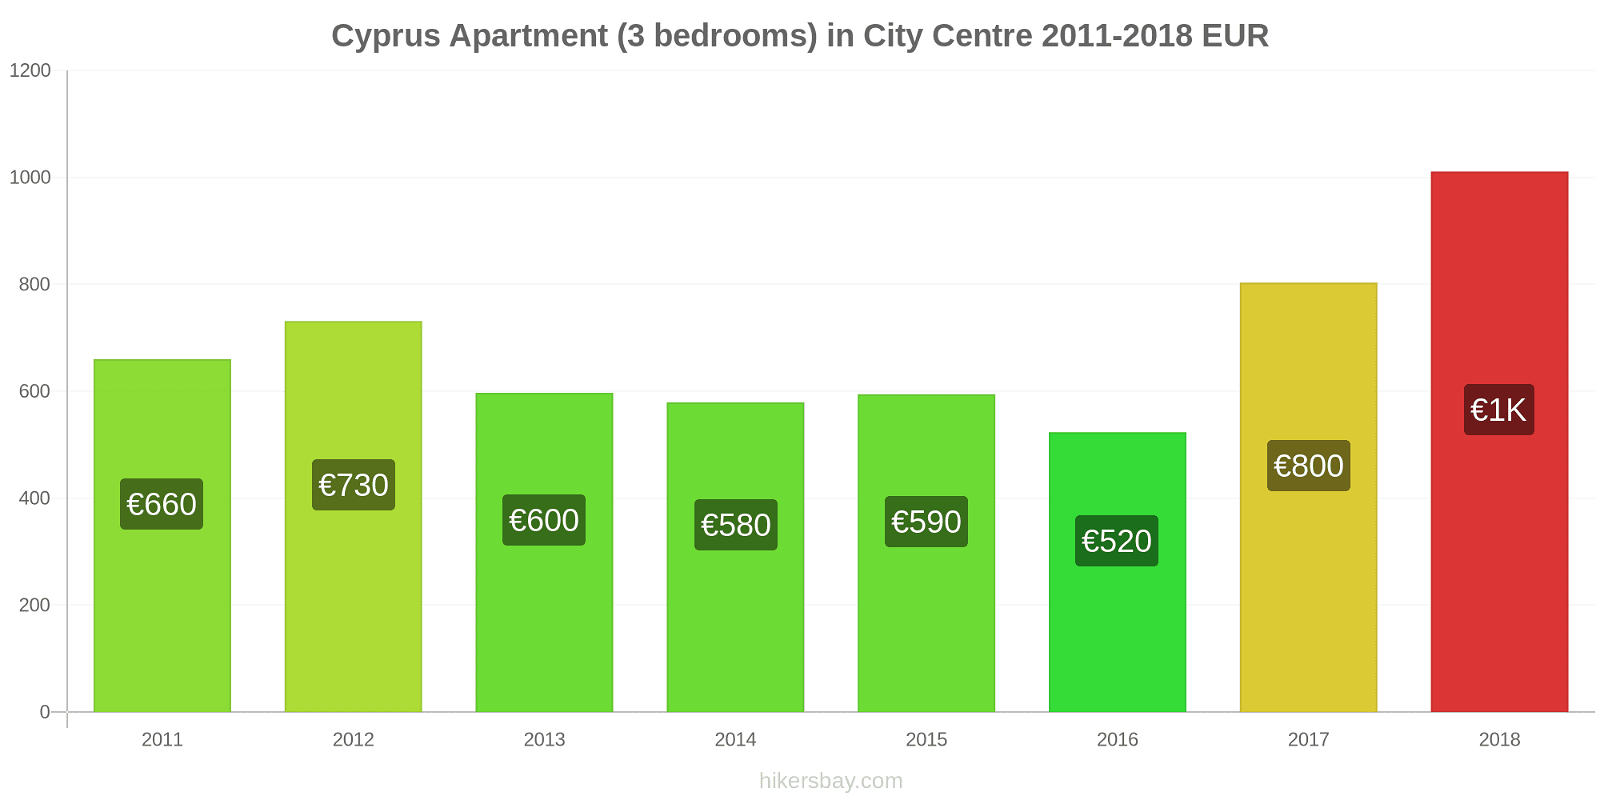 Cyprus price changes Apartment (3 bedrooms) in City Centre hikersbay.com